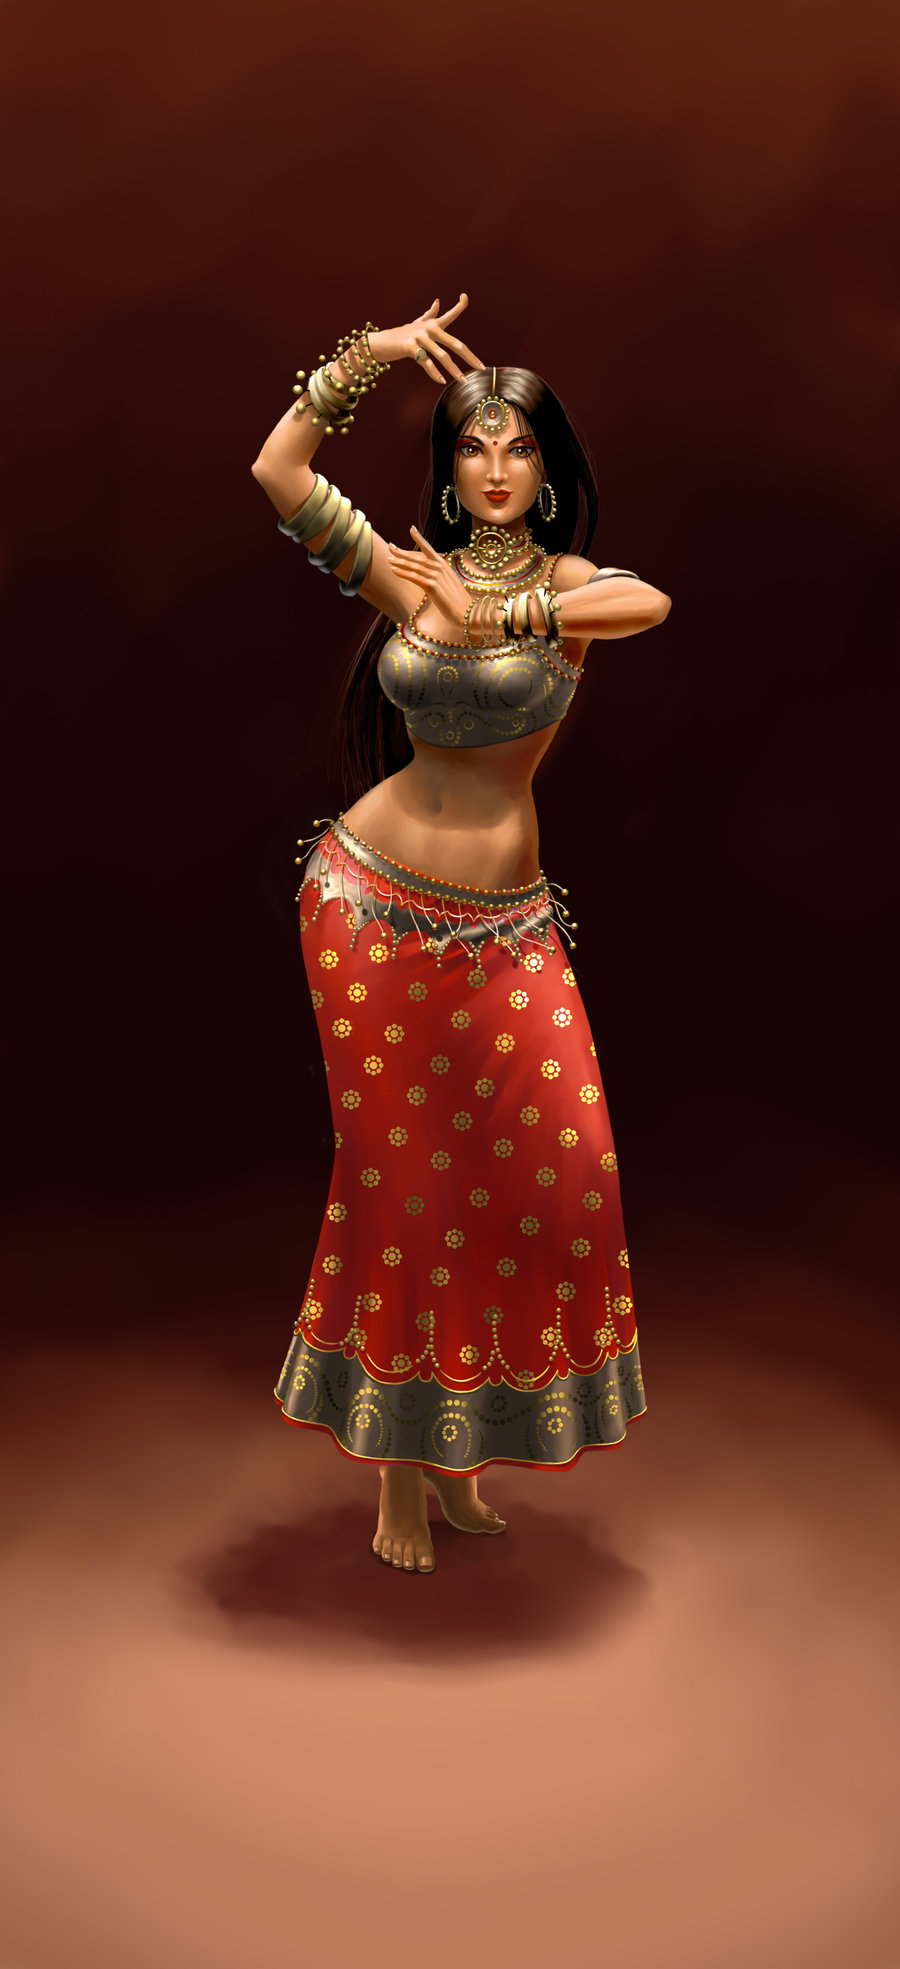 Даз 3д индийская танцовщица